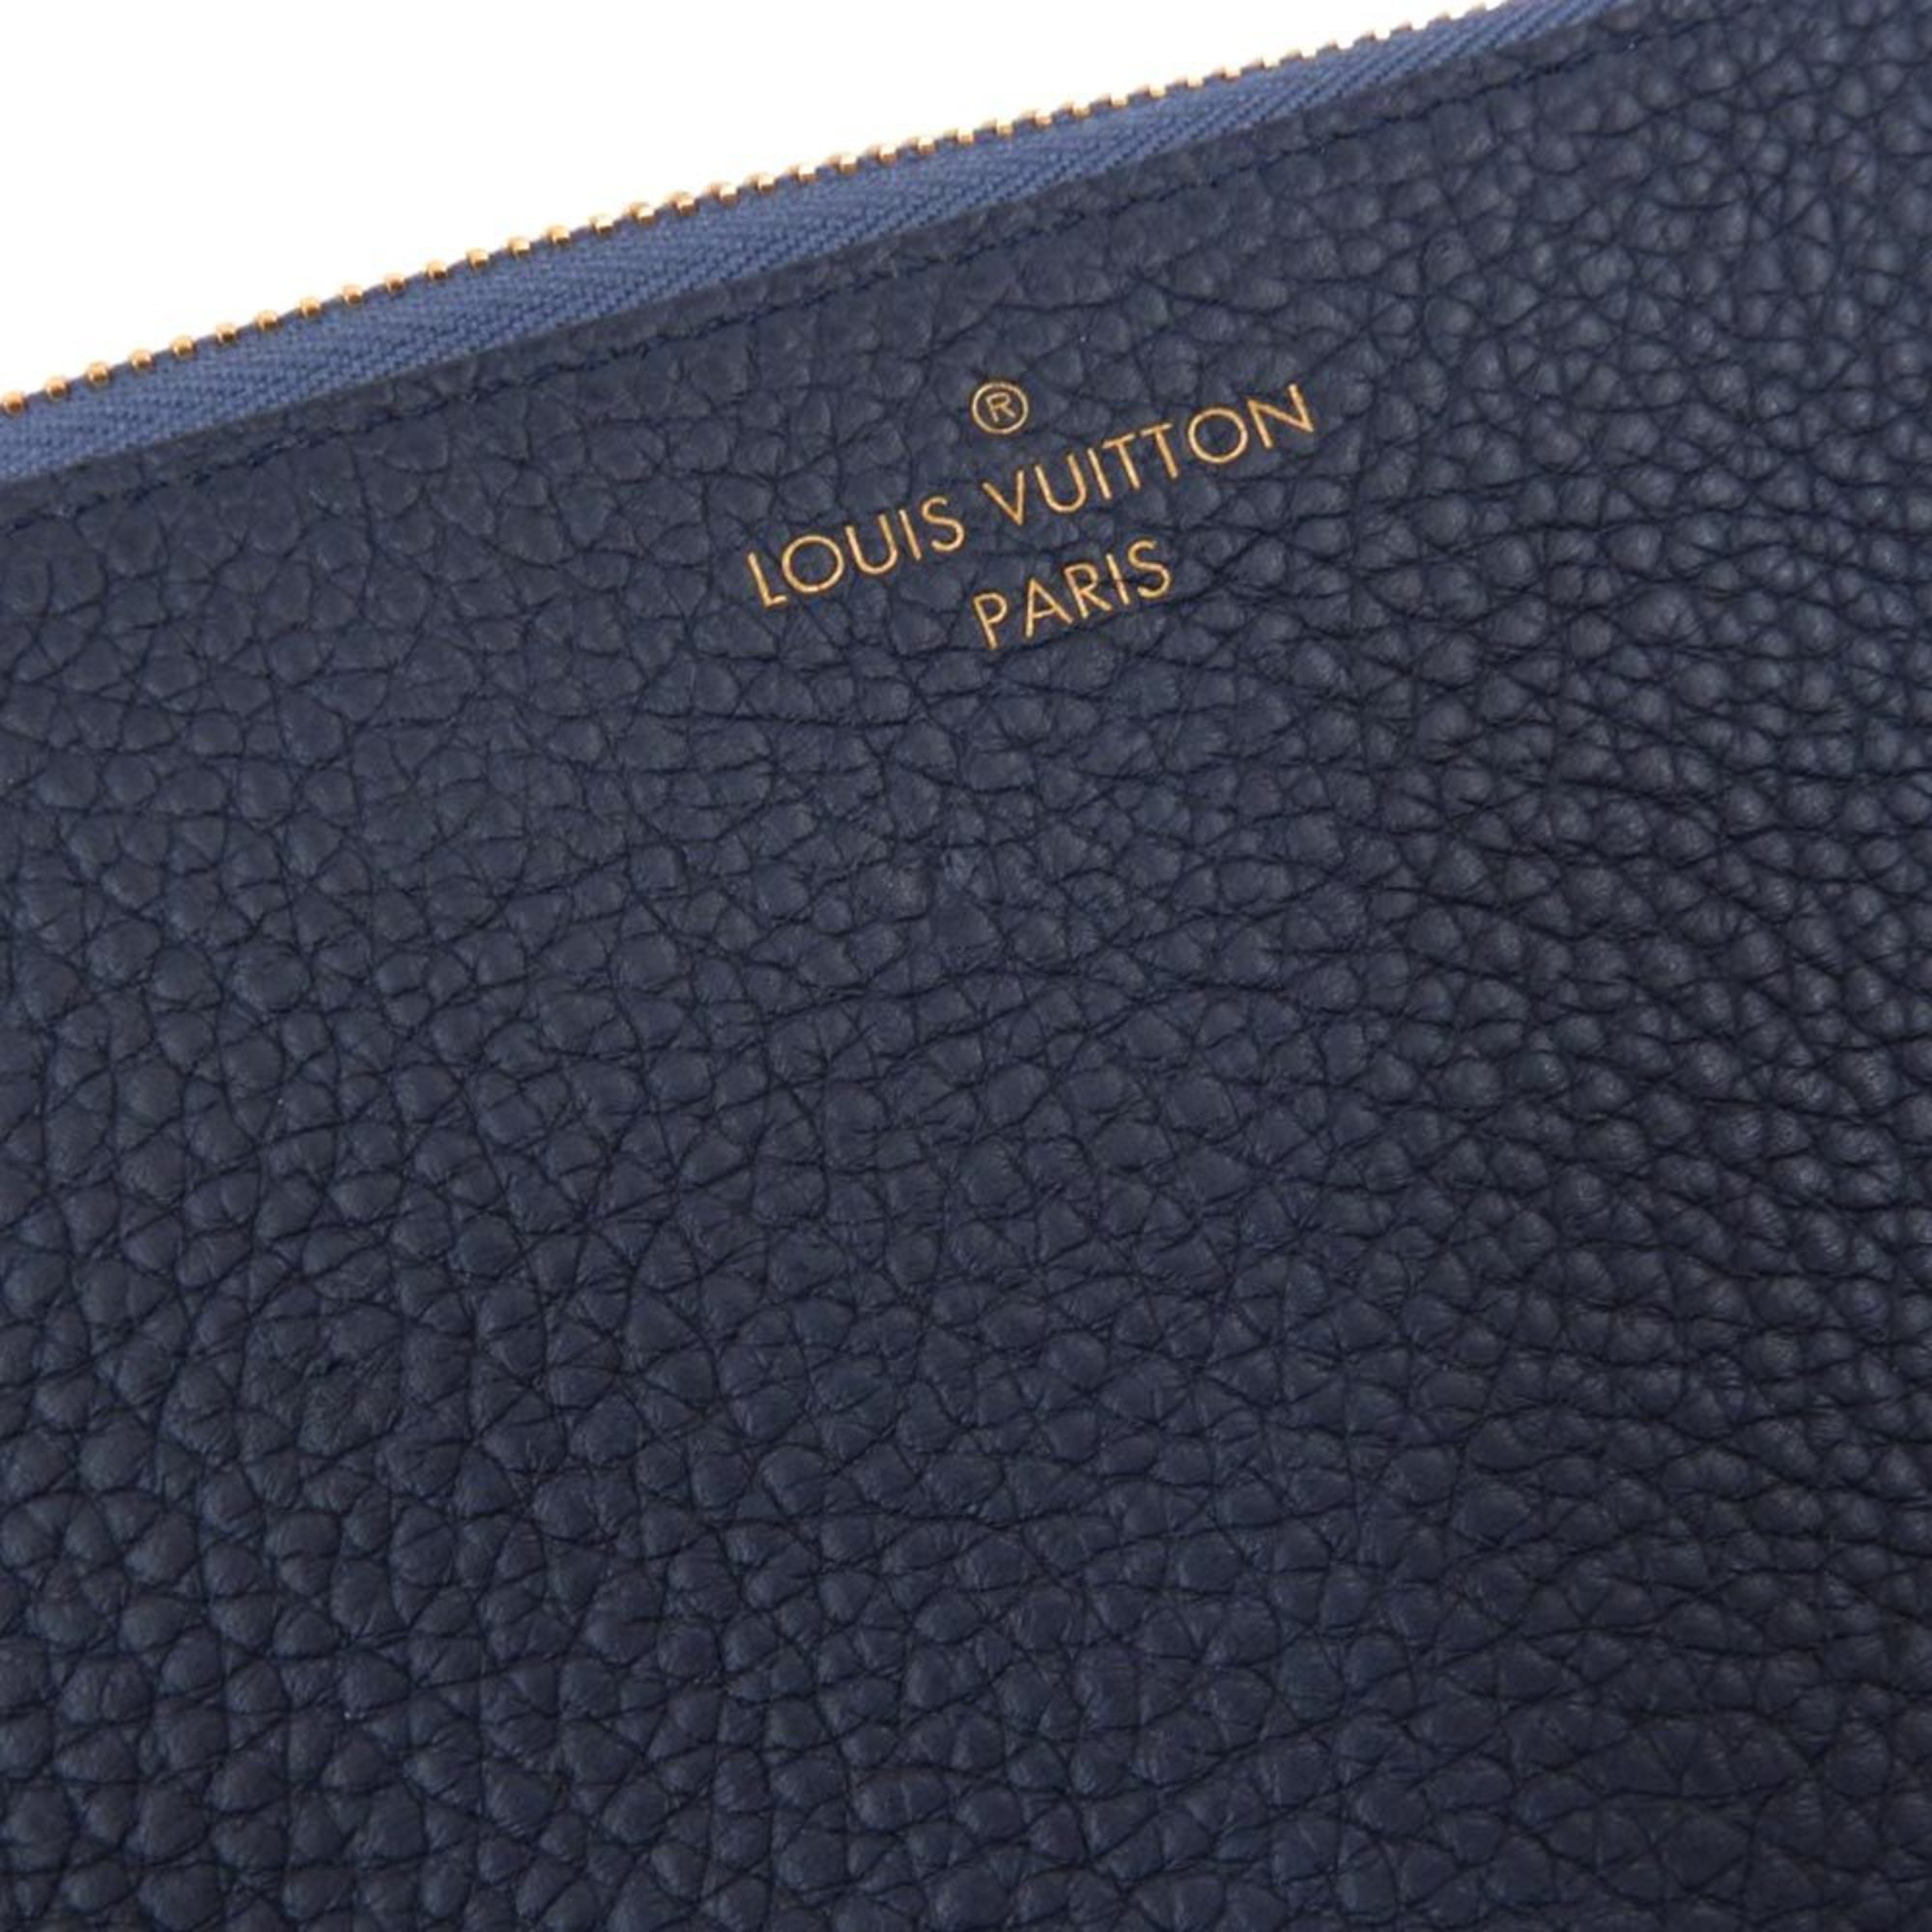 Authenticated Used Louis Vuitton LOUIS VUITTON Portefeuille Comet